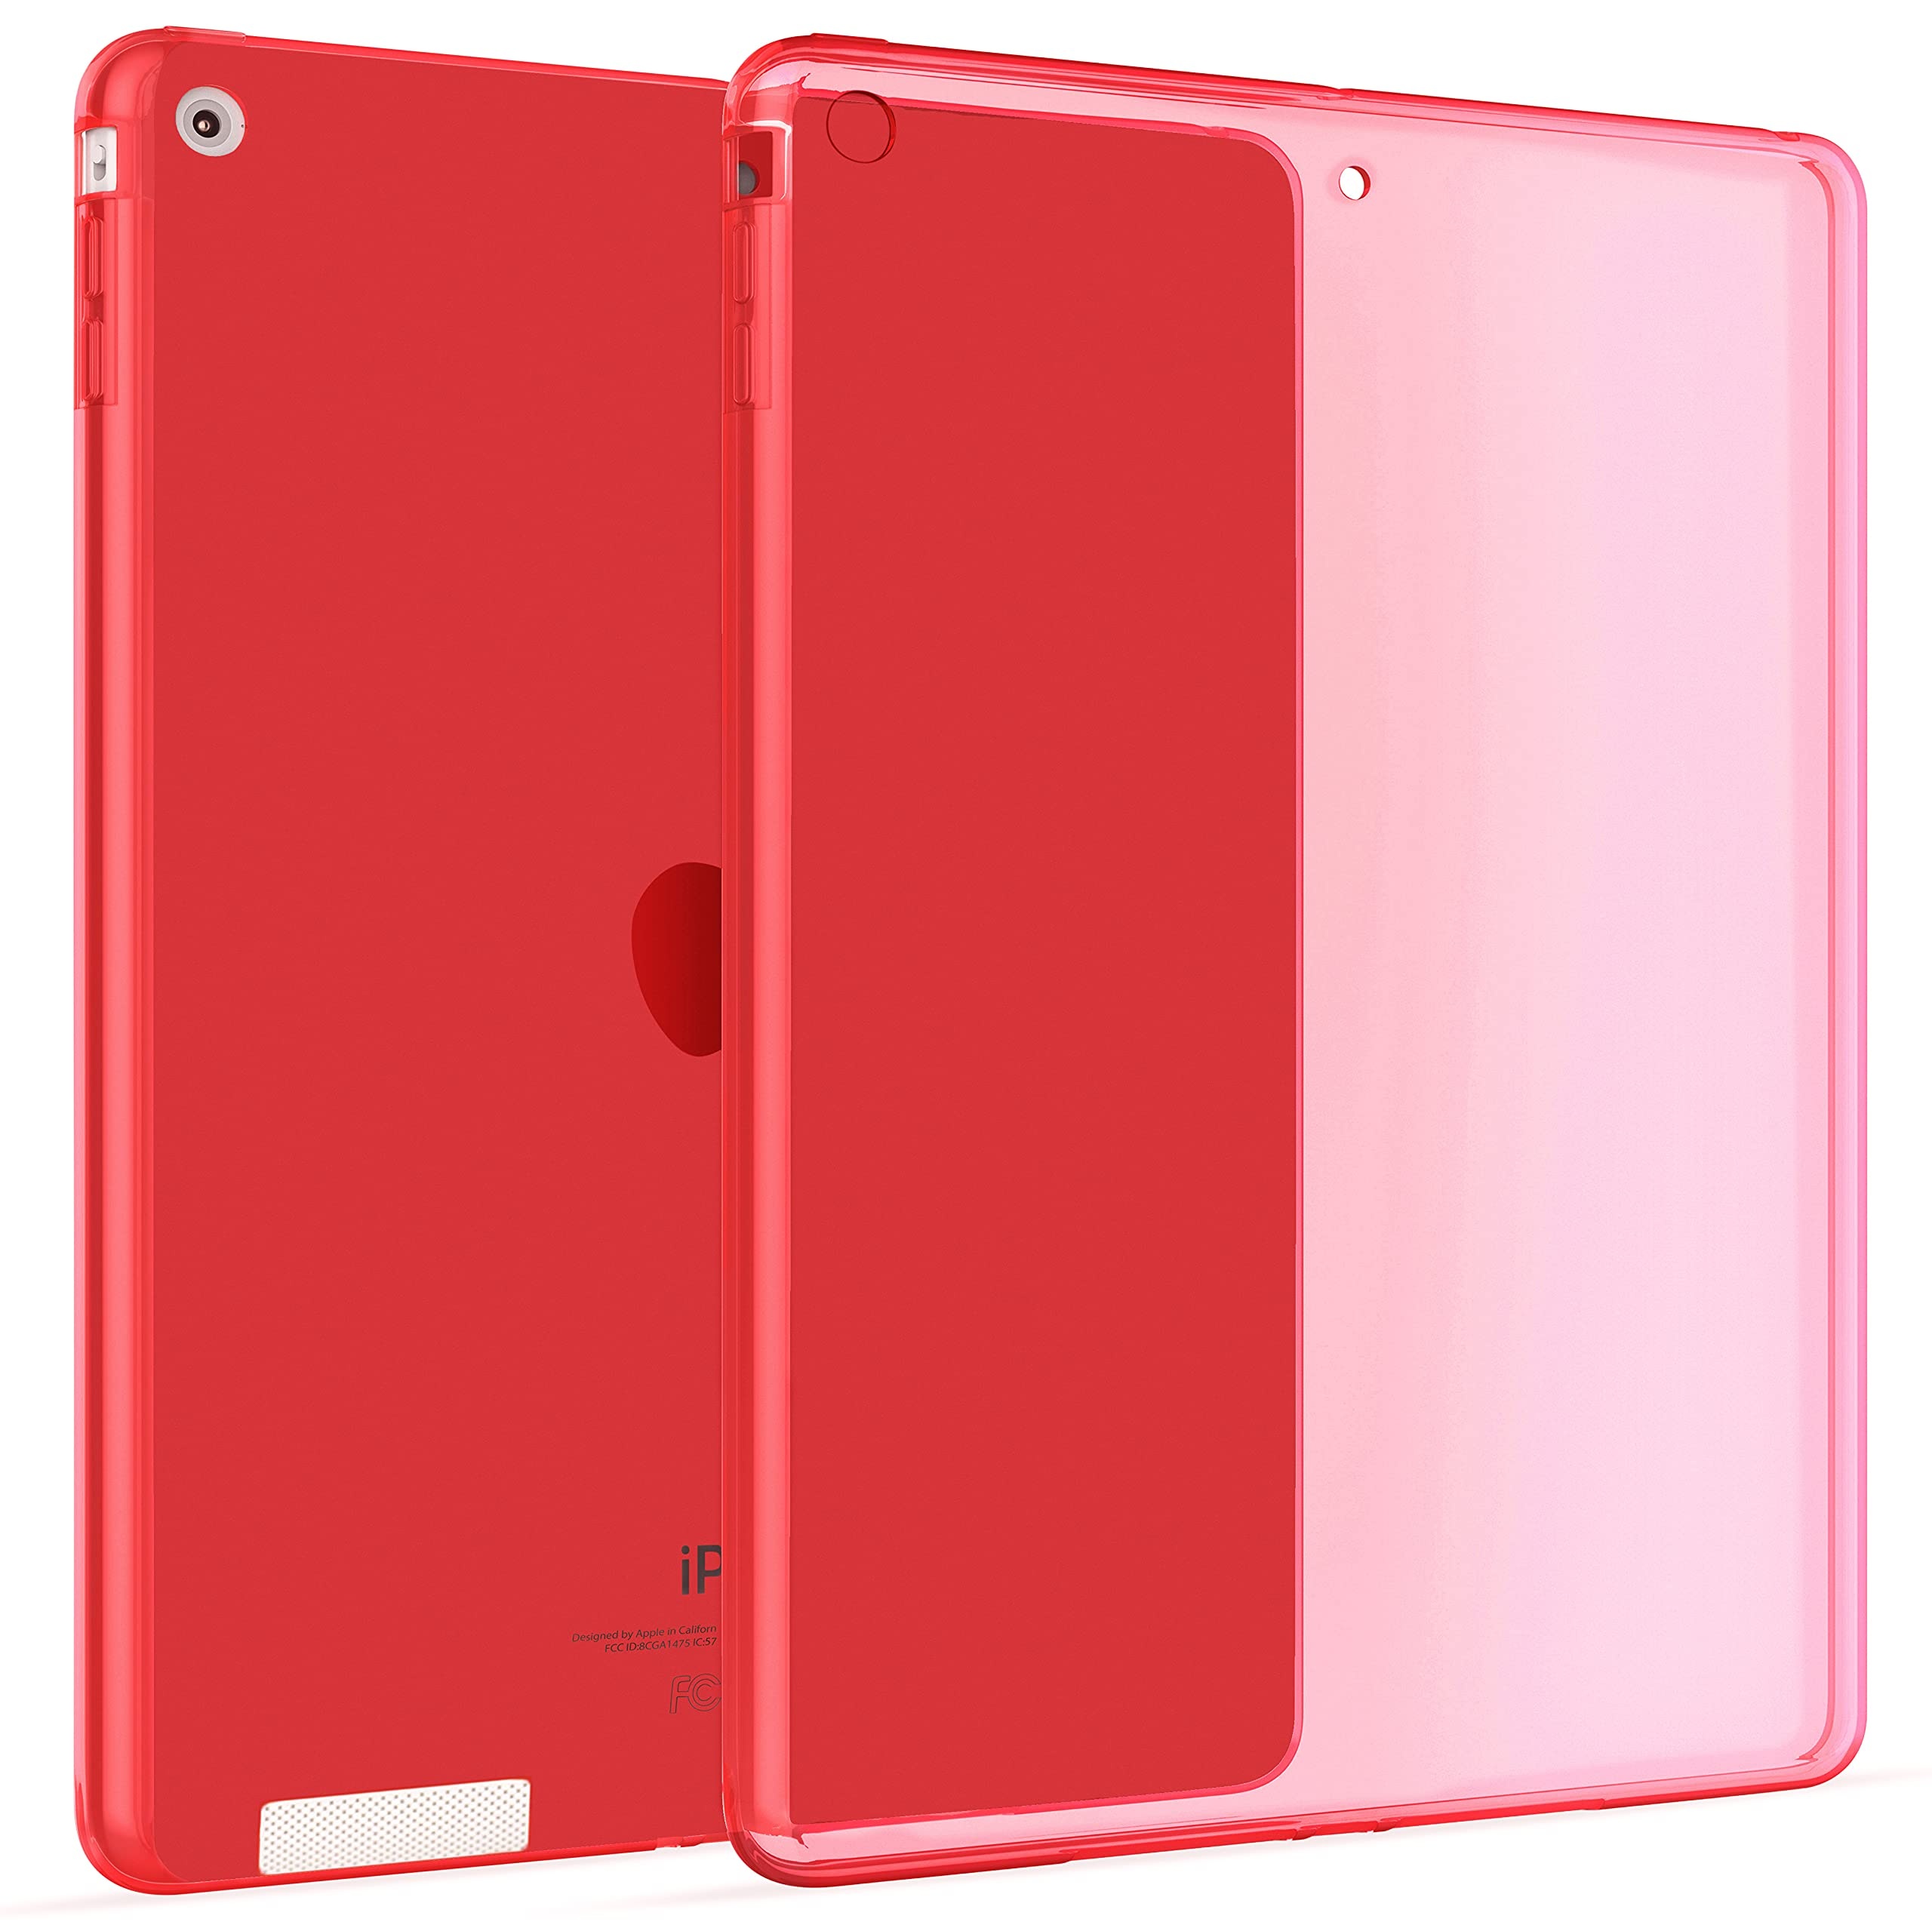 Okuli Hülle Kompatibel mit Apple iPad 2, iPad 3, iPad 4 - Transparent Silikon Cover Case Schutzhülle in Rot